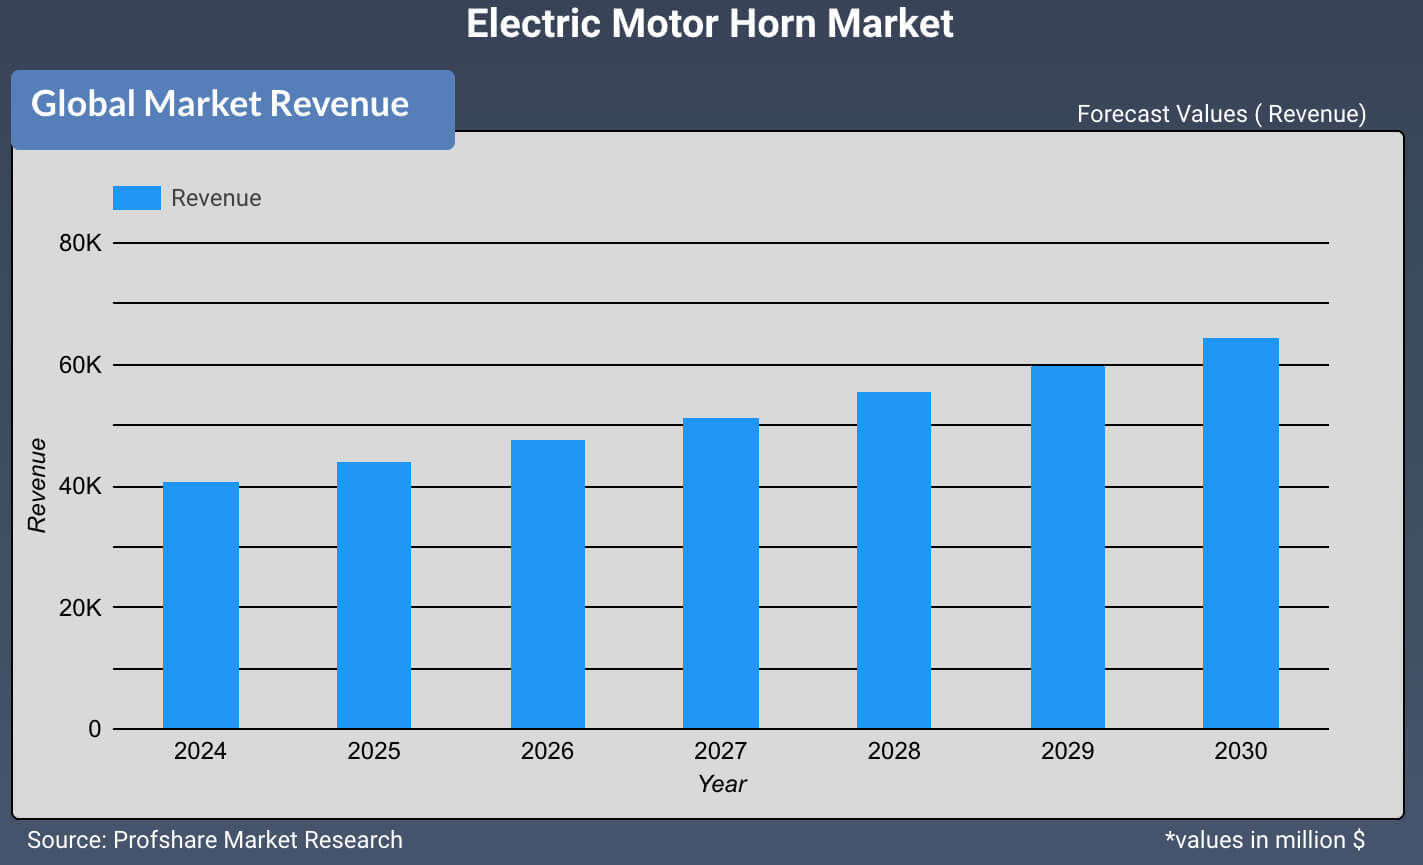 Electric Motor Horn Market